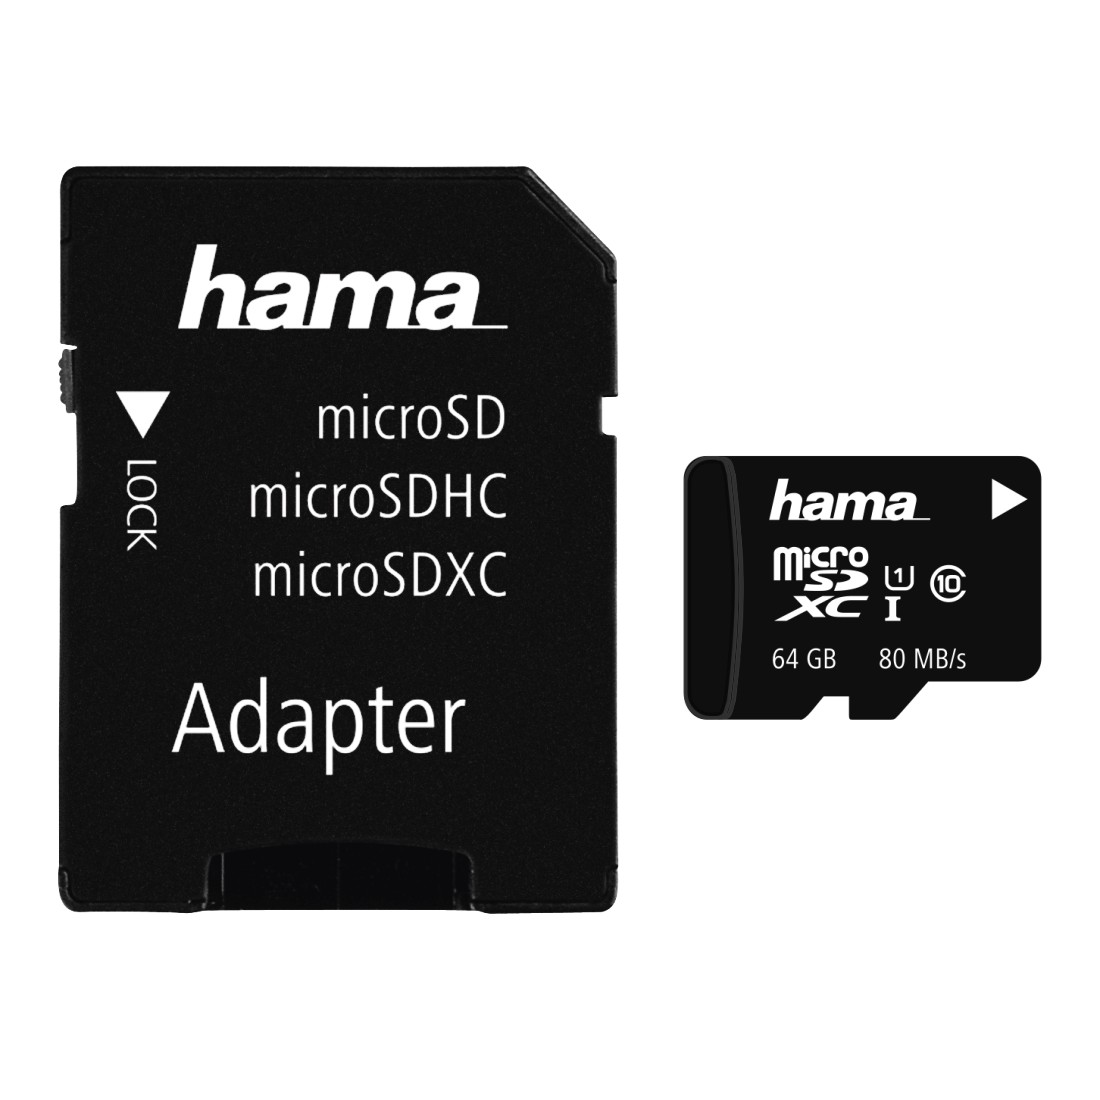 Hama microSDHC 64GB